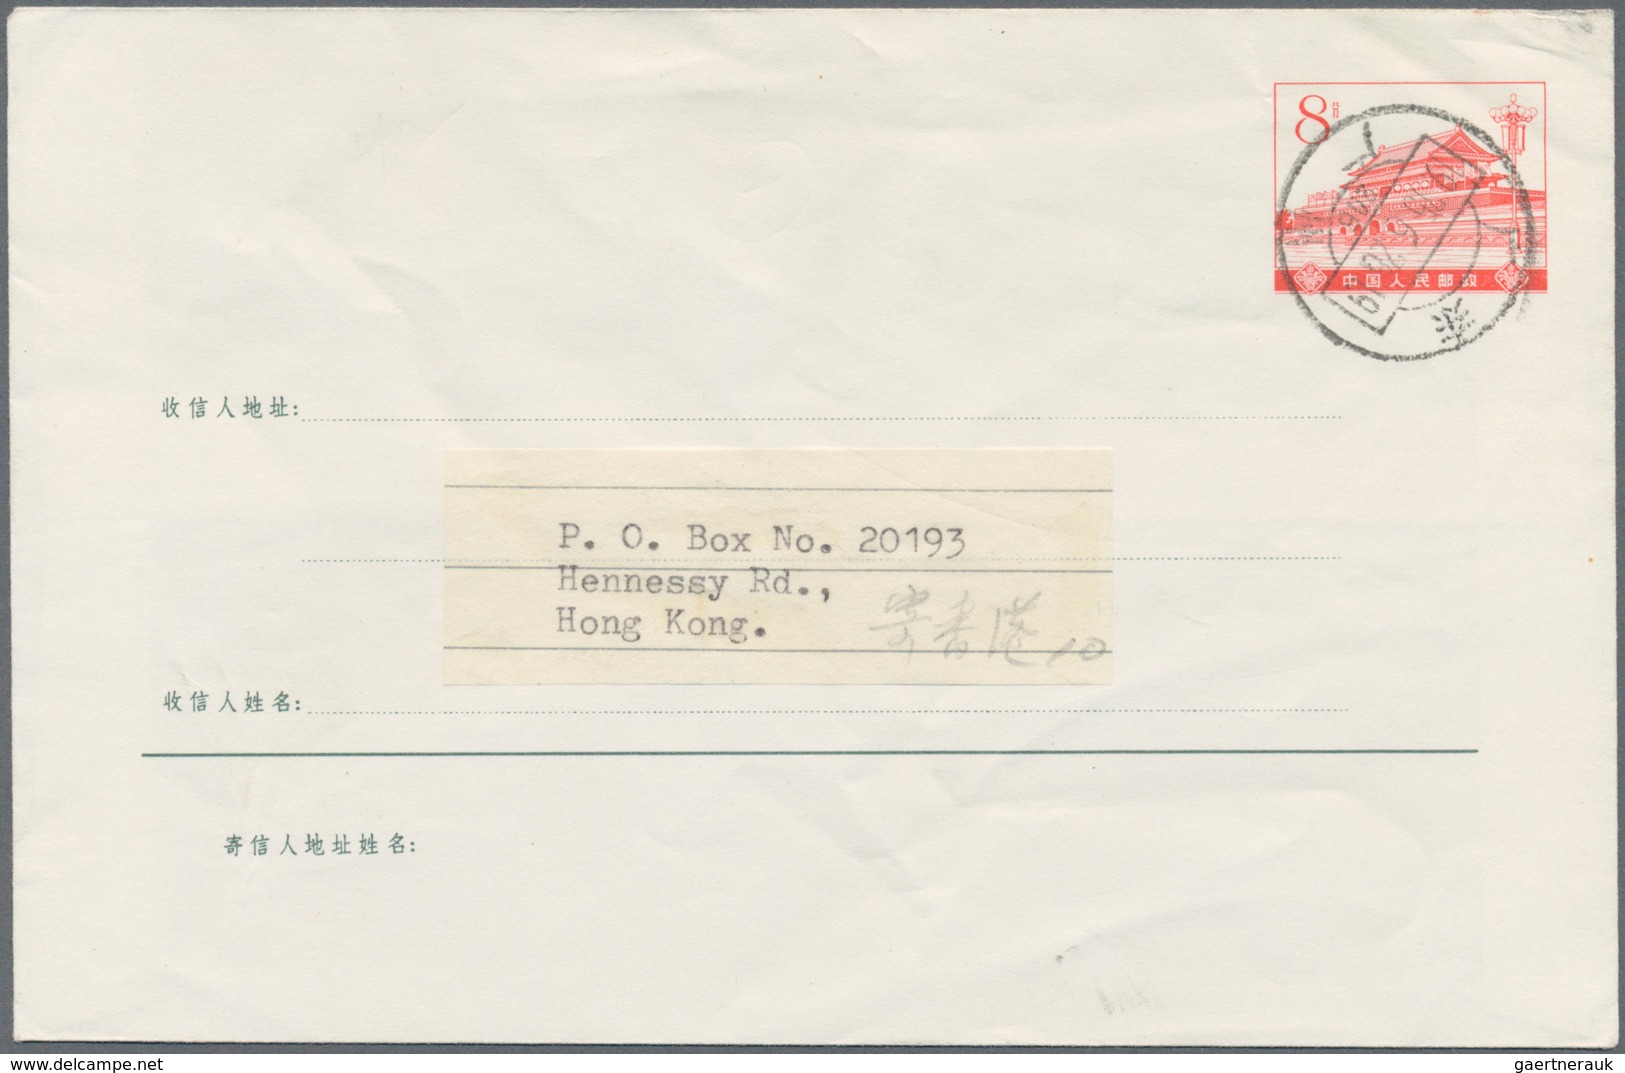 China - Volksrepublik - Ganzsachen: 1970/82, 8 f. red stationery envelopes used (28, each imprint-da